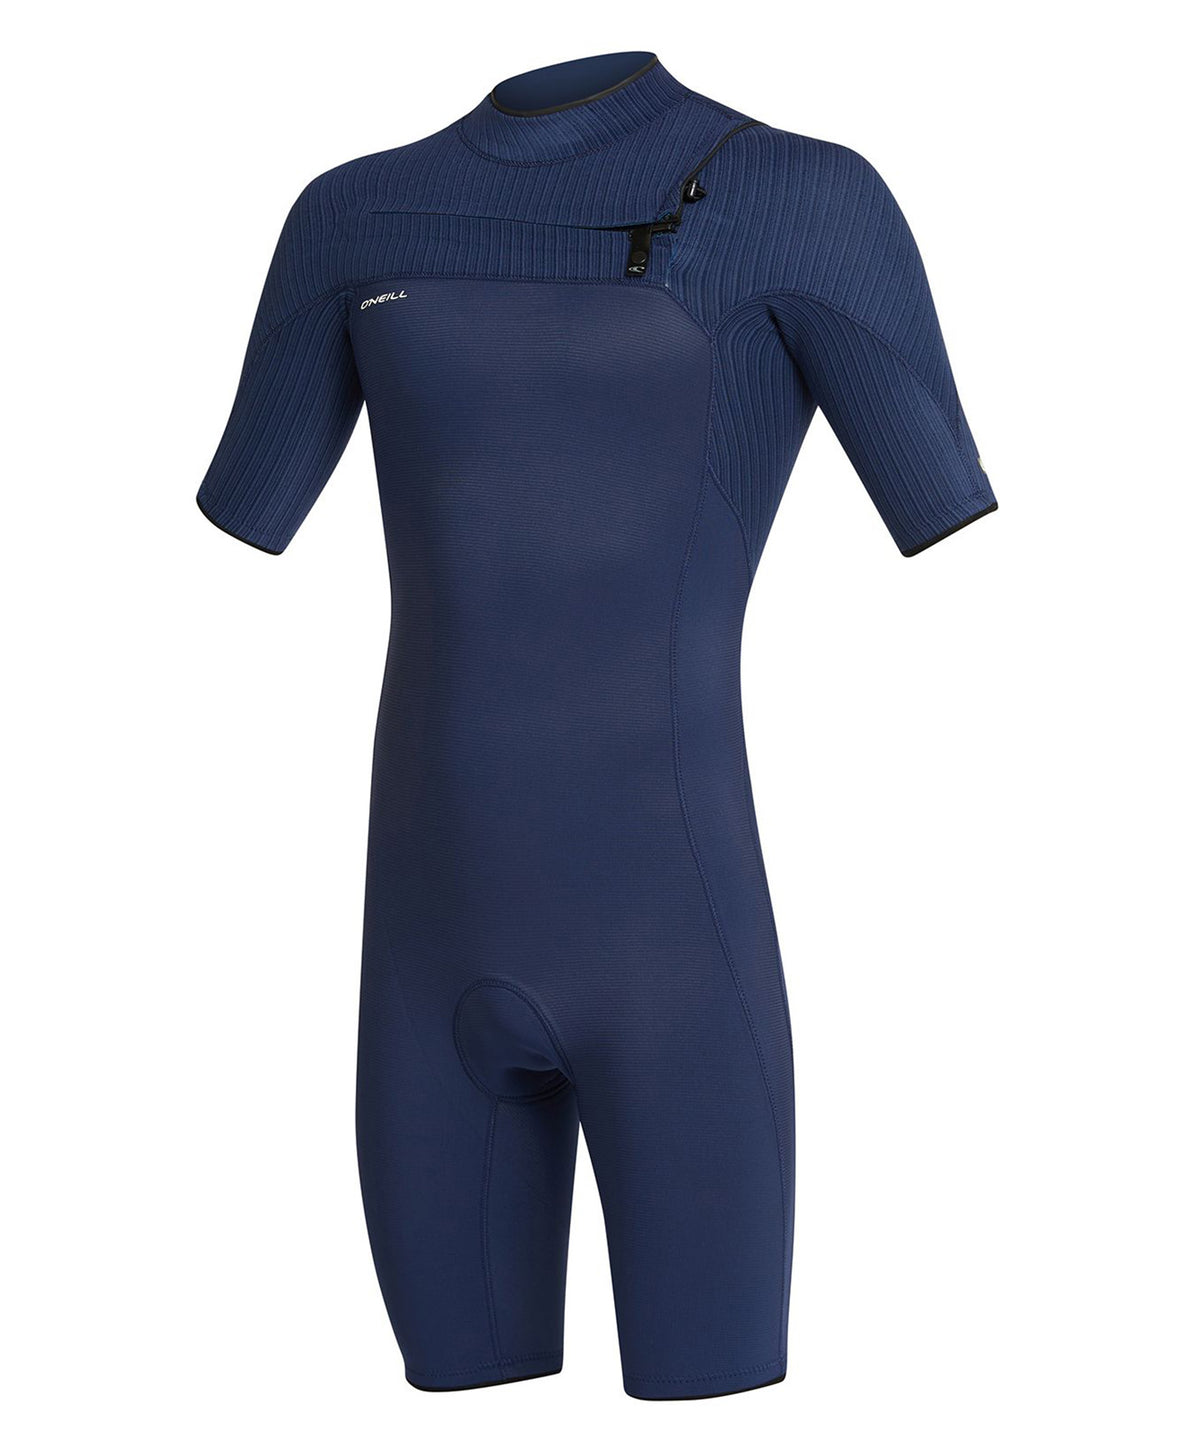 HyperFreak Short Sleeve Springsuit 2mm Chest Zip Wetsuit - Navy